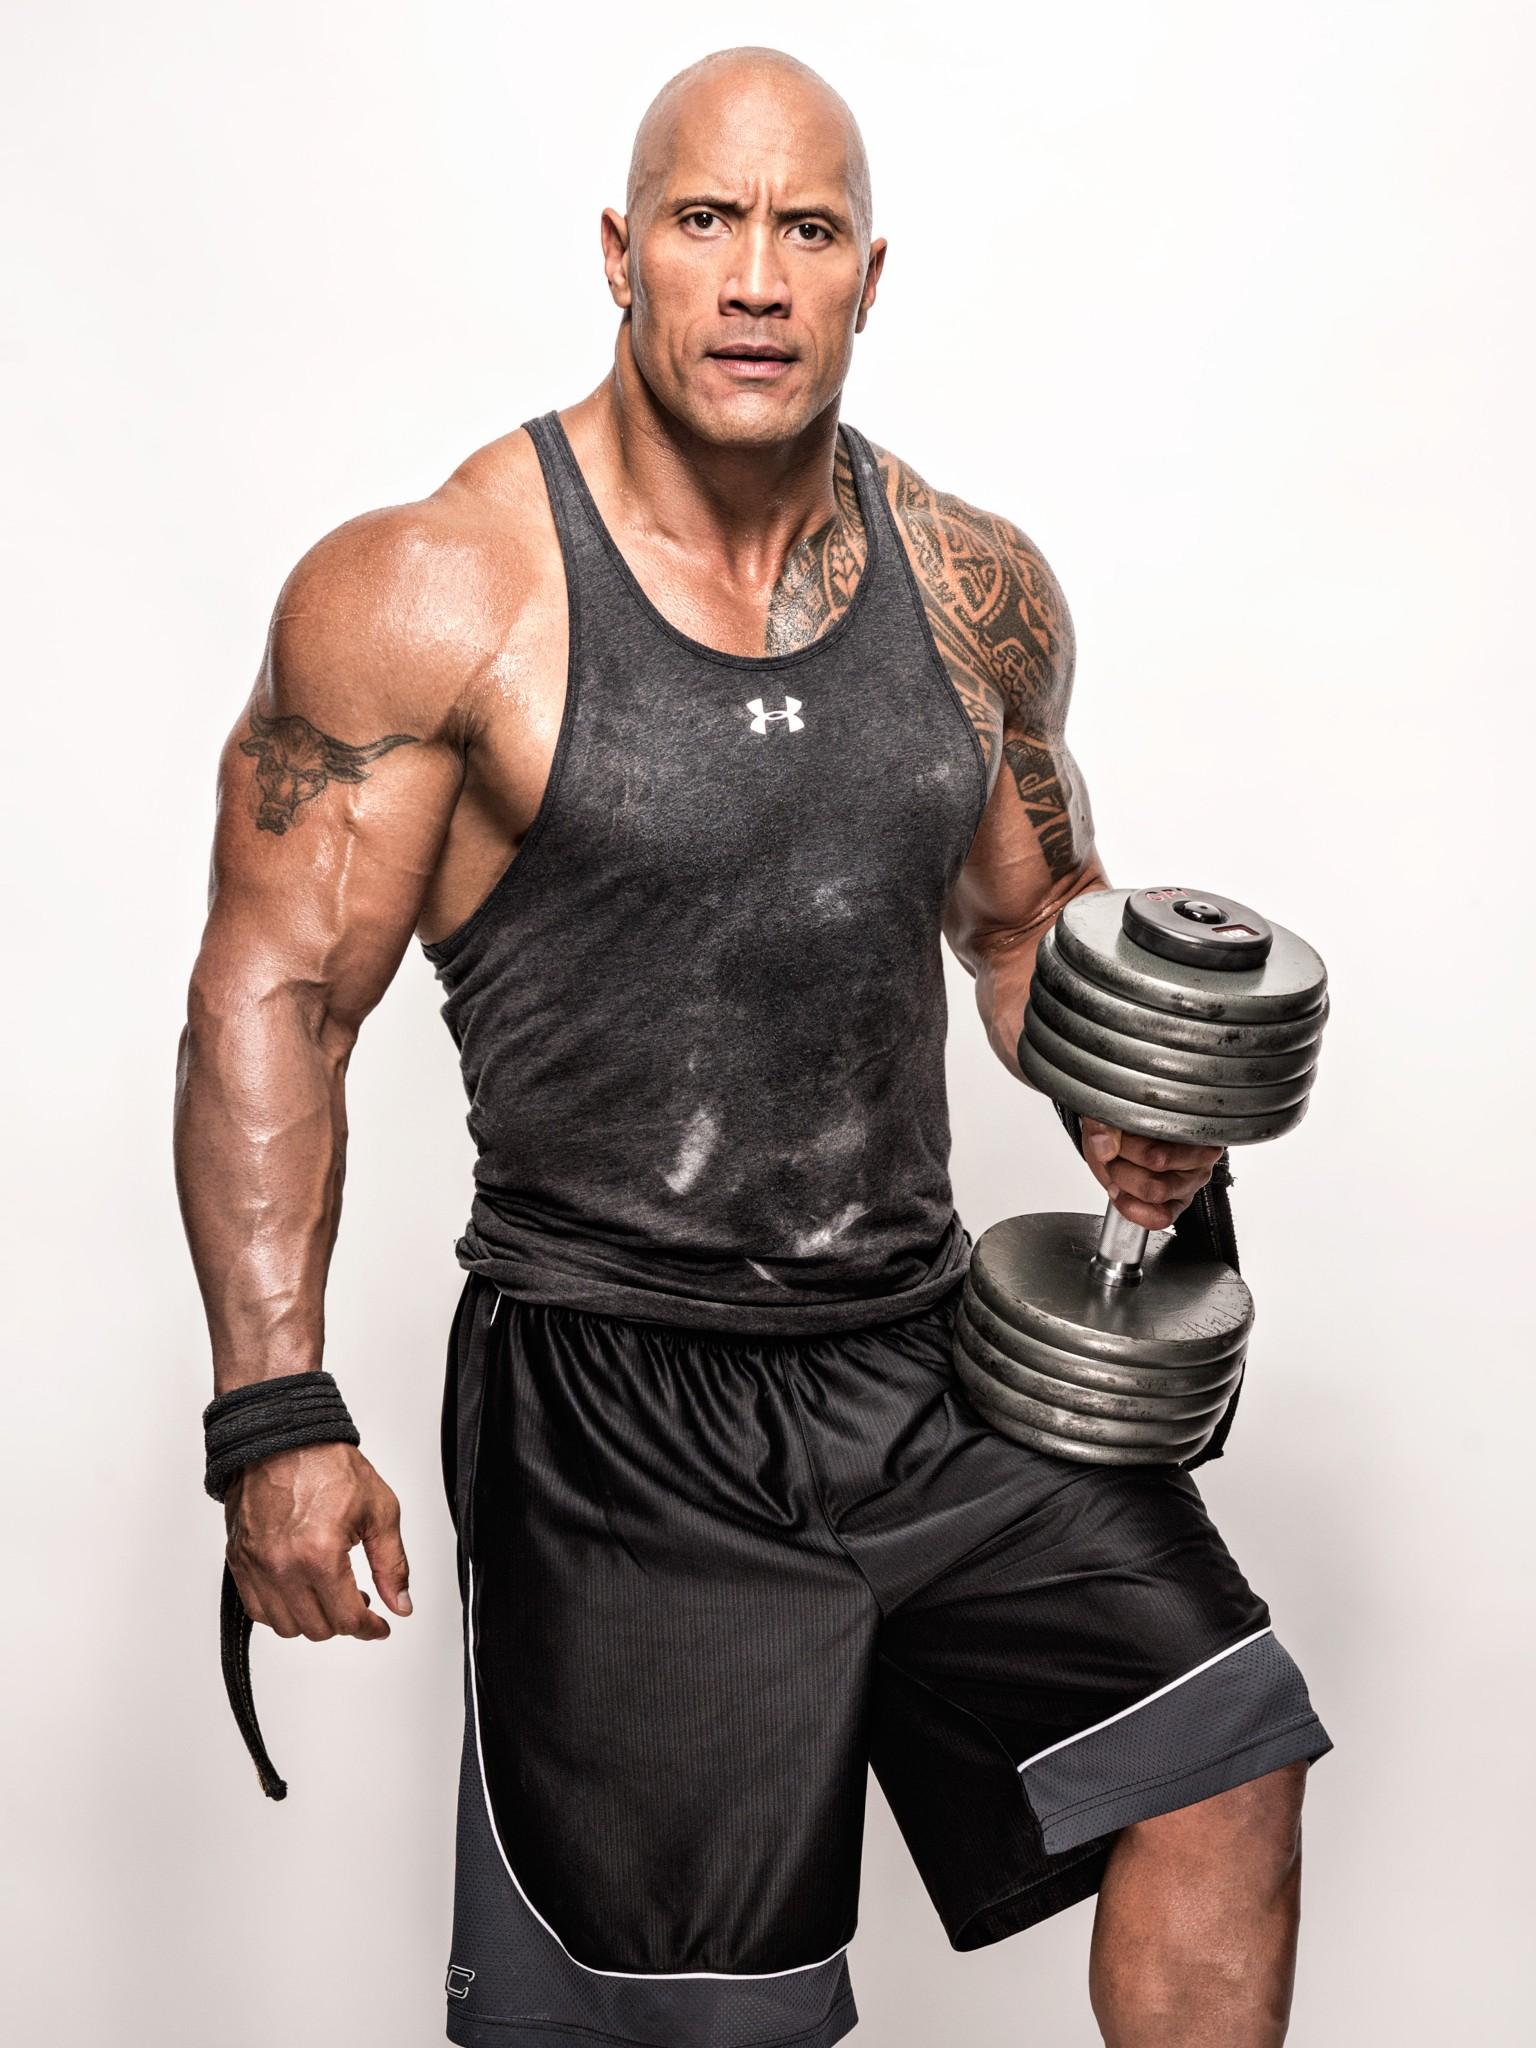 HD wallpaper: Bodybuilder, Dwayne Johnson, Tattoos, 5K, The Rock | Wallpaper  Flare